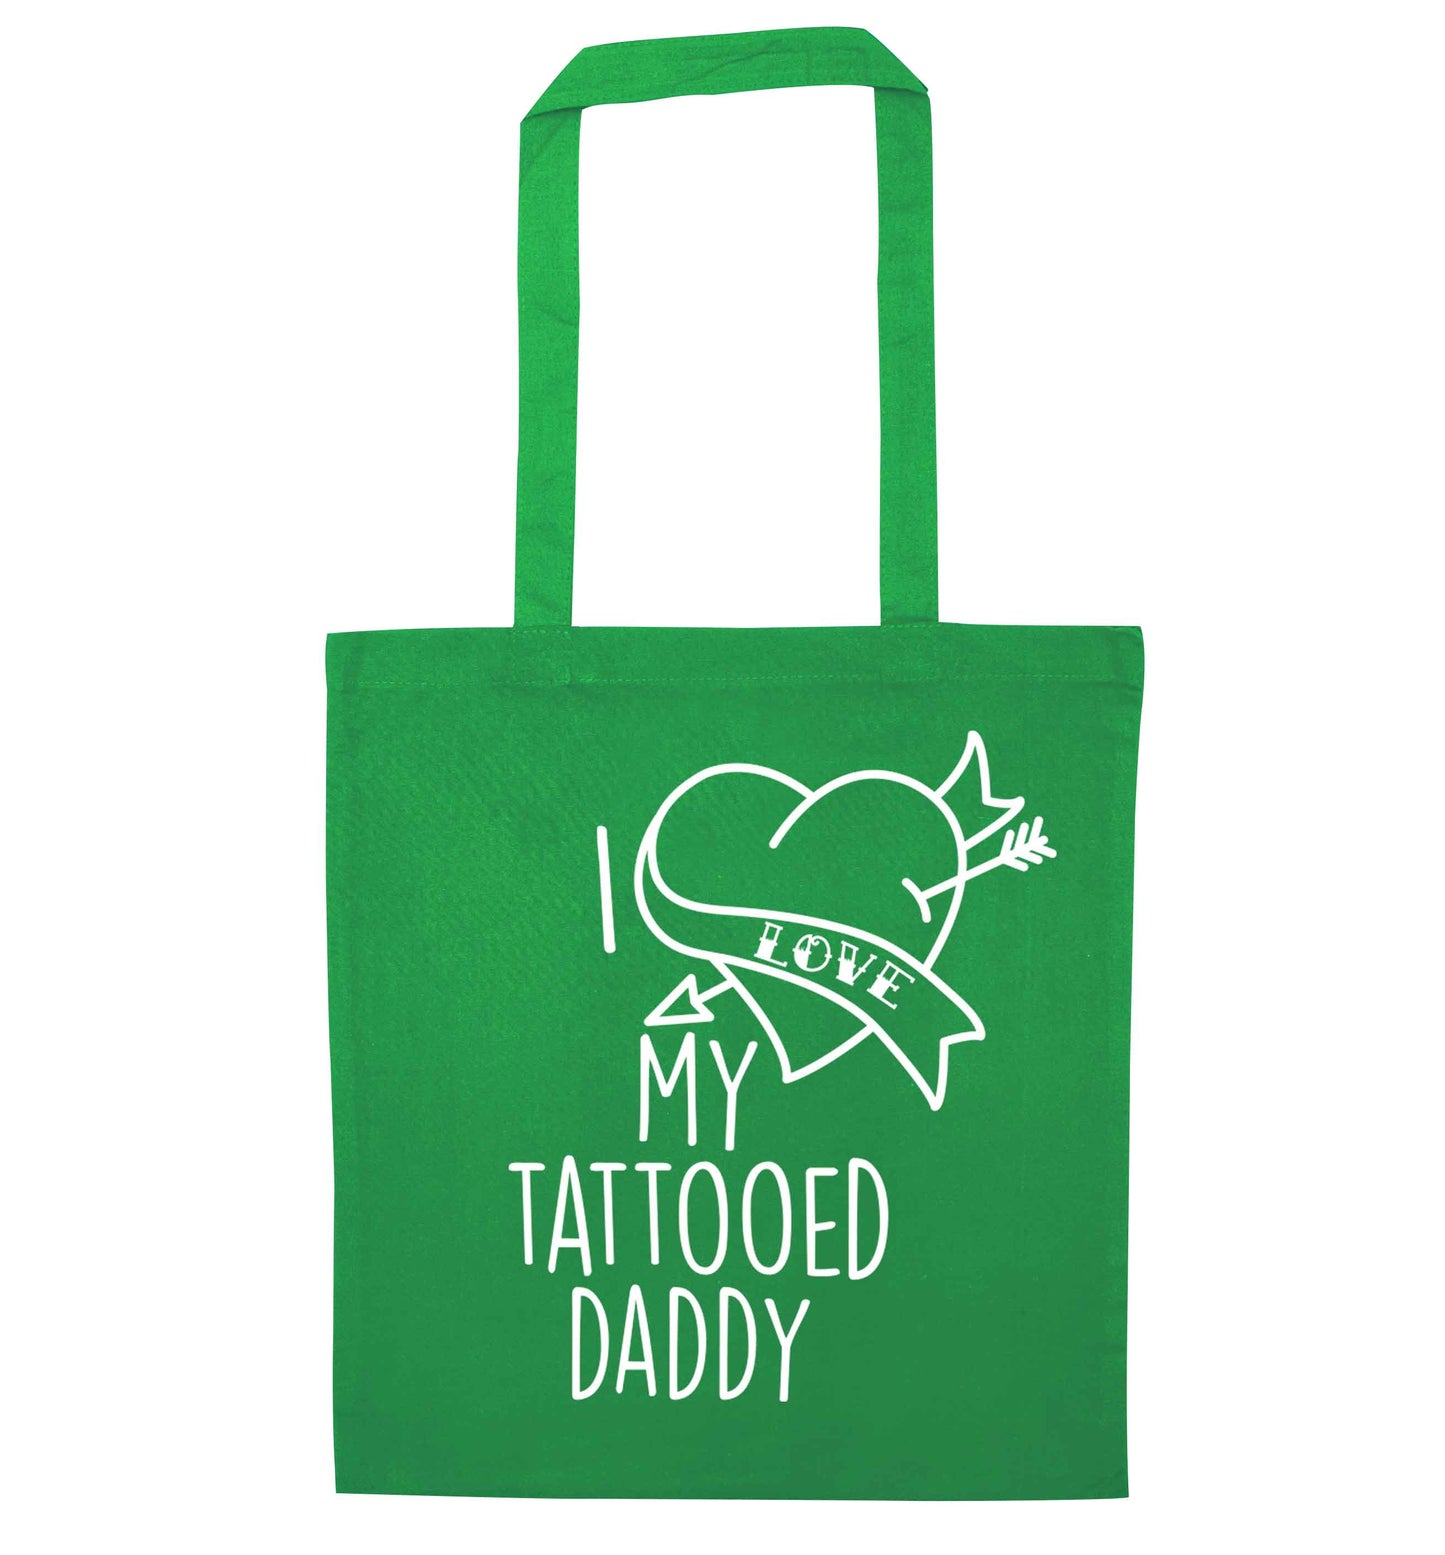 I love my tattooed daddy green tote bag